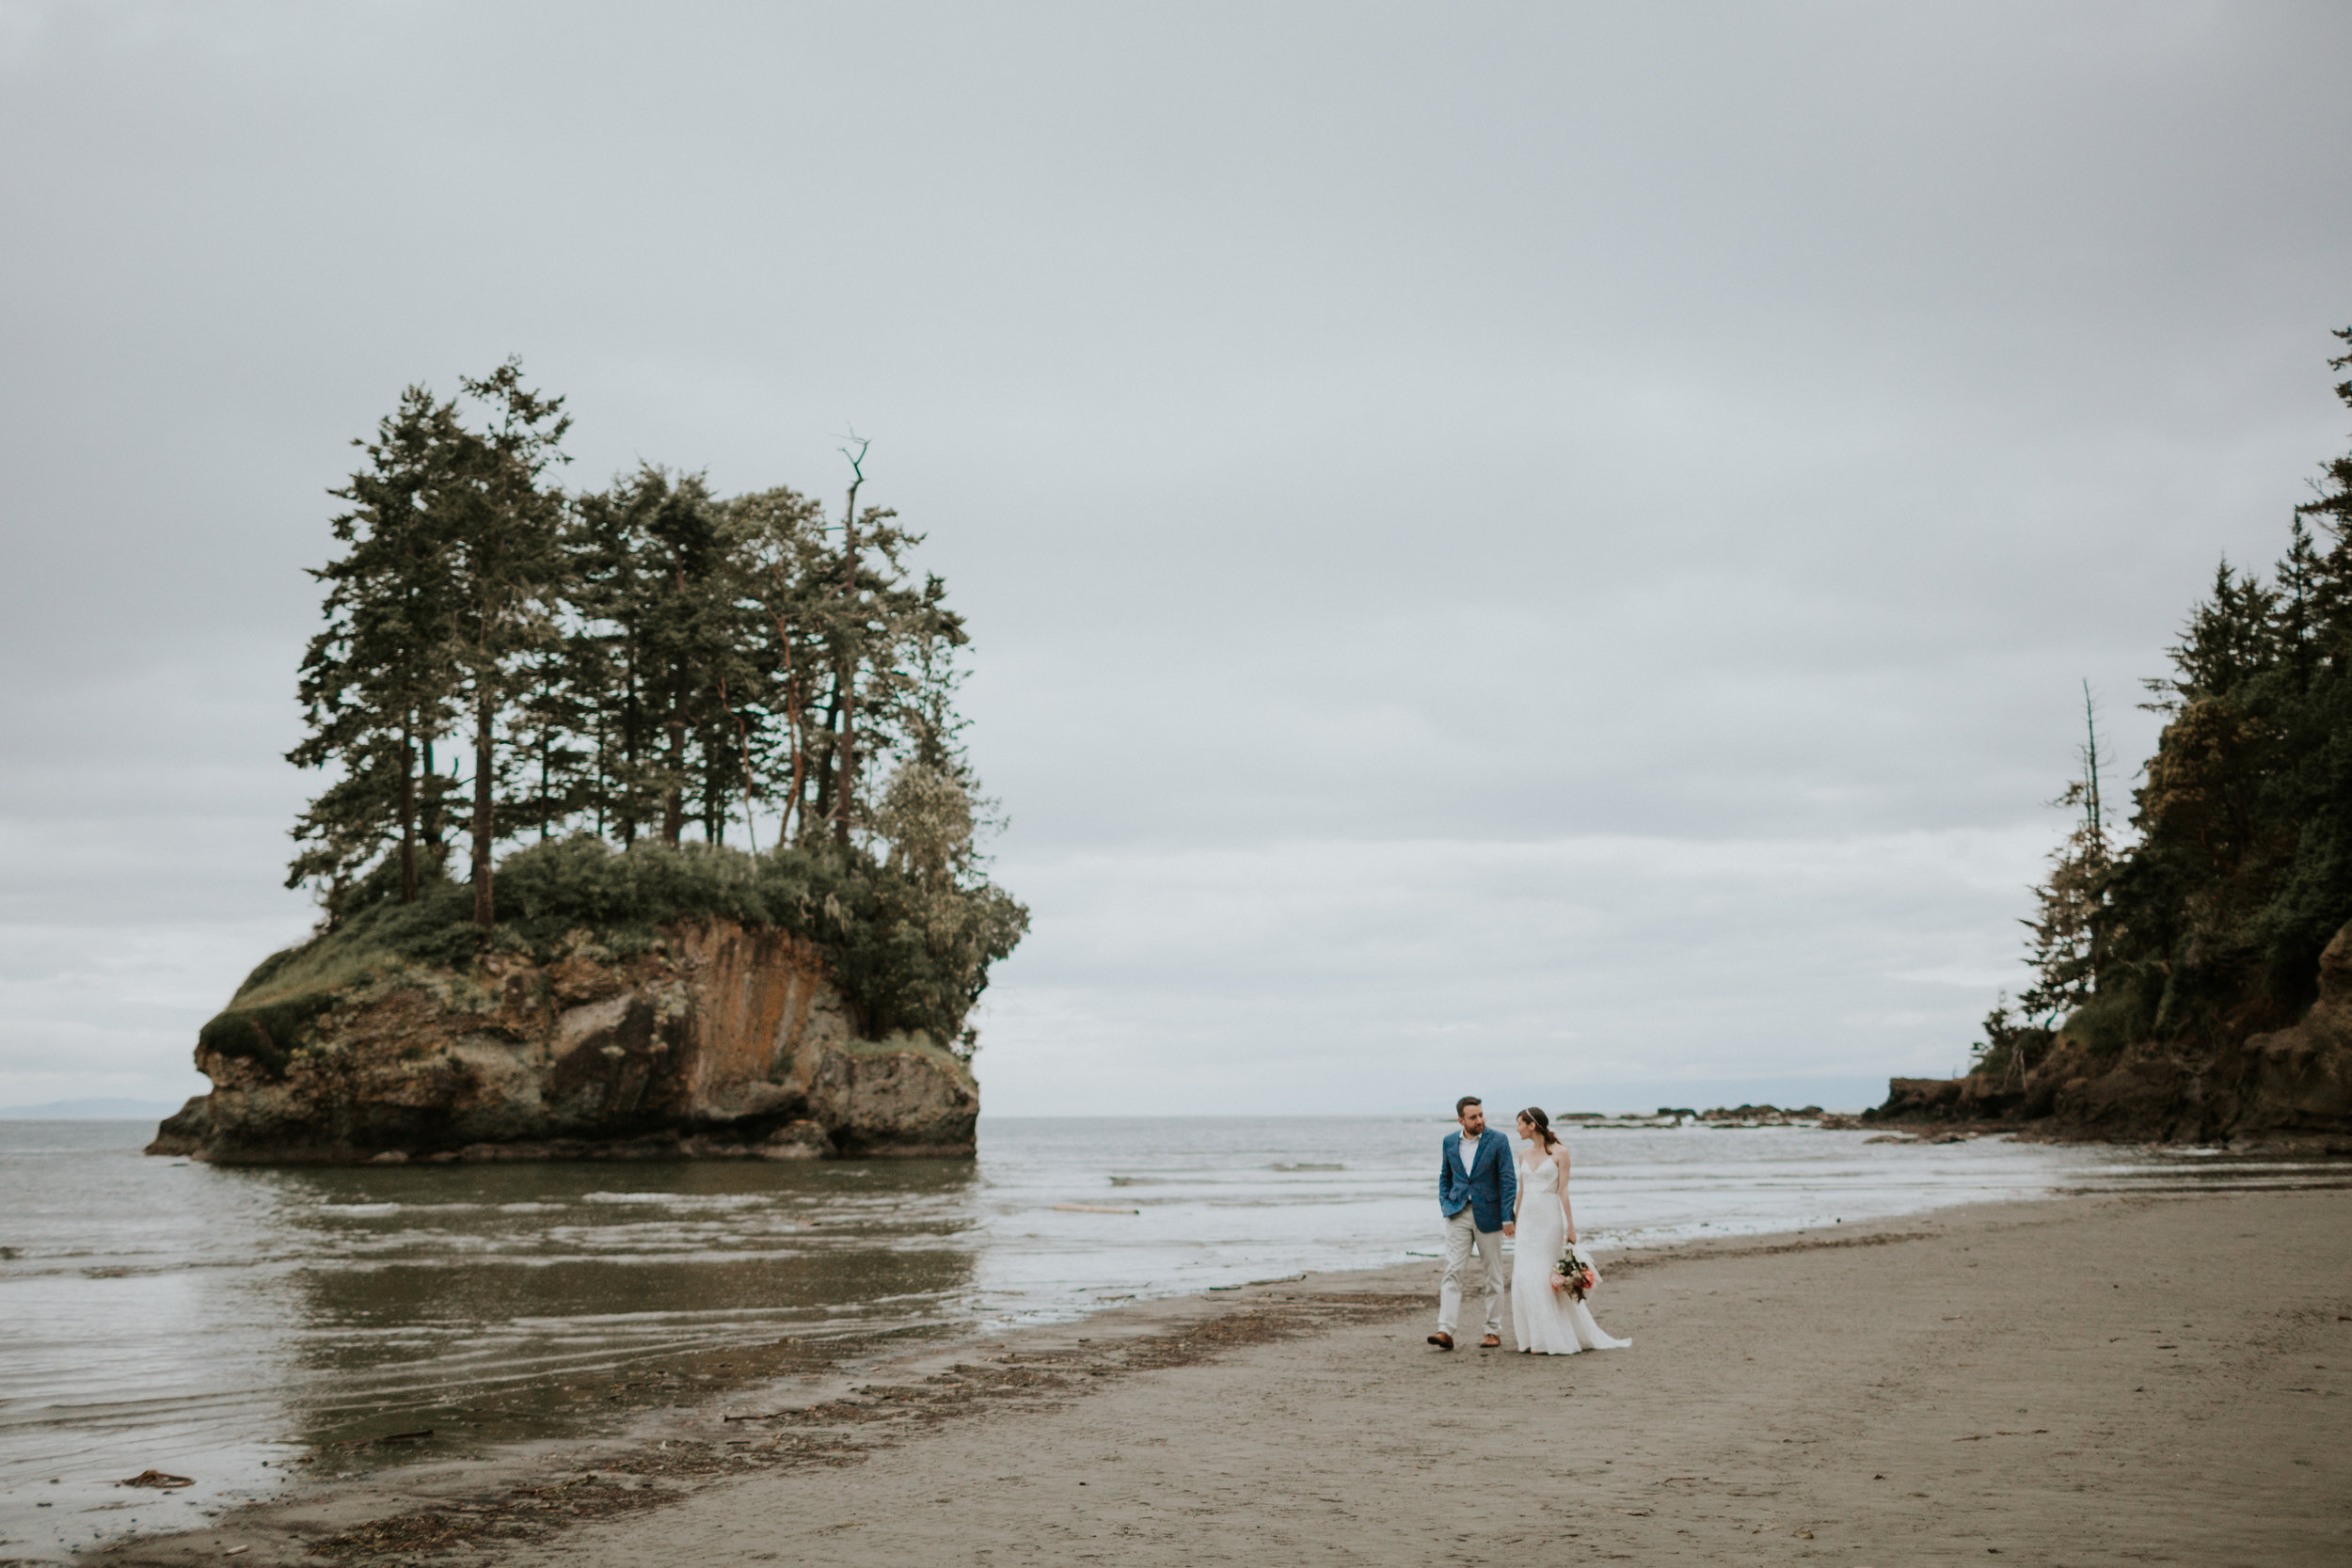 PNW-elopement-wedding-engagement-olympic national park-port angeles-hurricane ridge-lake crescent-kayla dawn photography- photographer-photography-kayladawnphoto-296.jpg